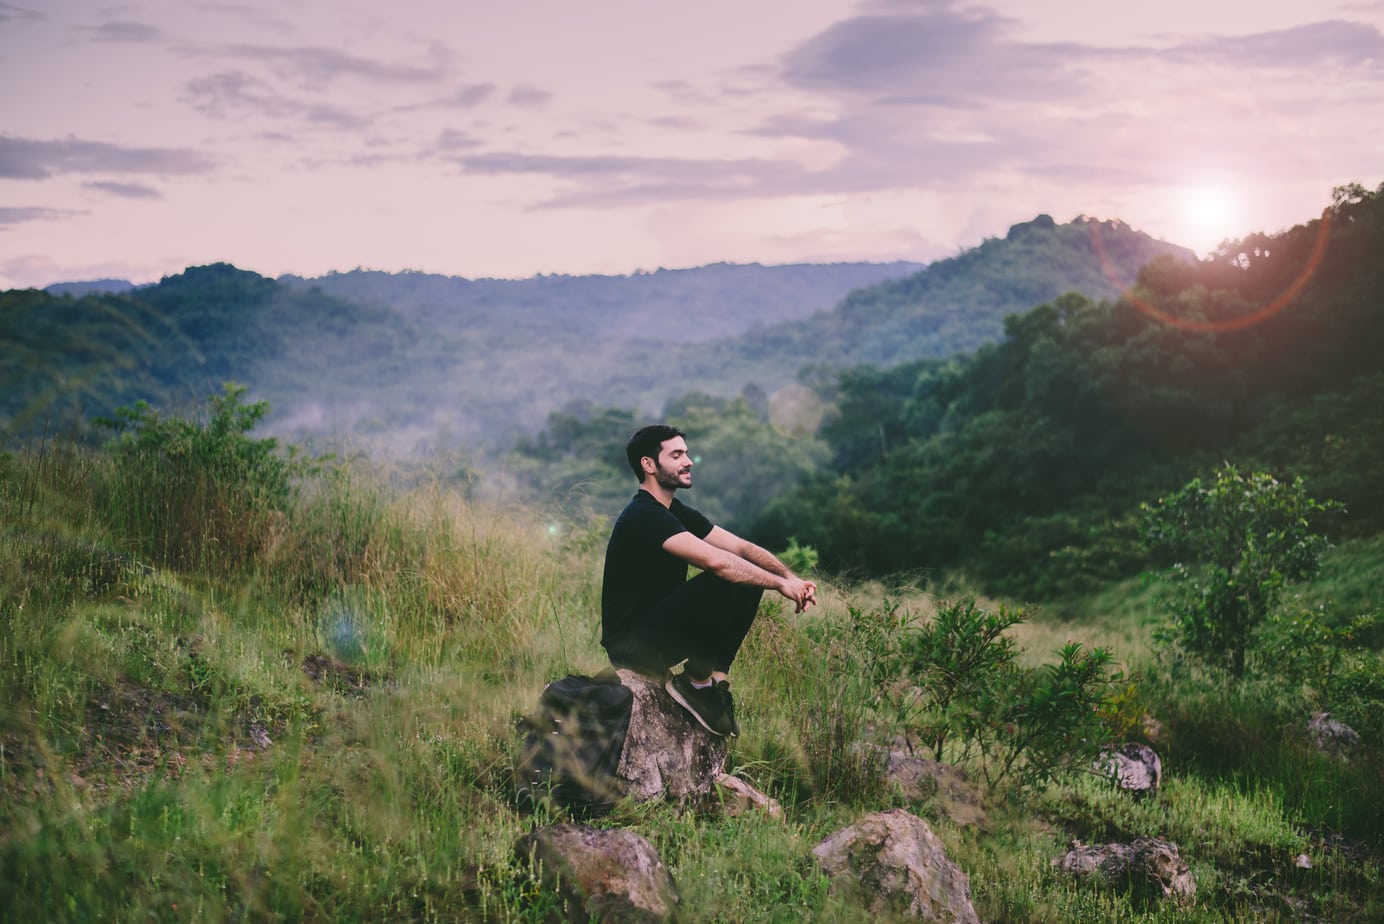 A man sitting meditating on a mountainside